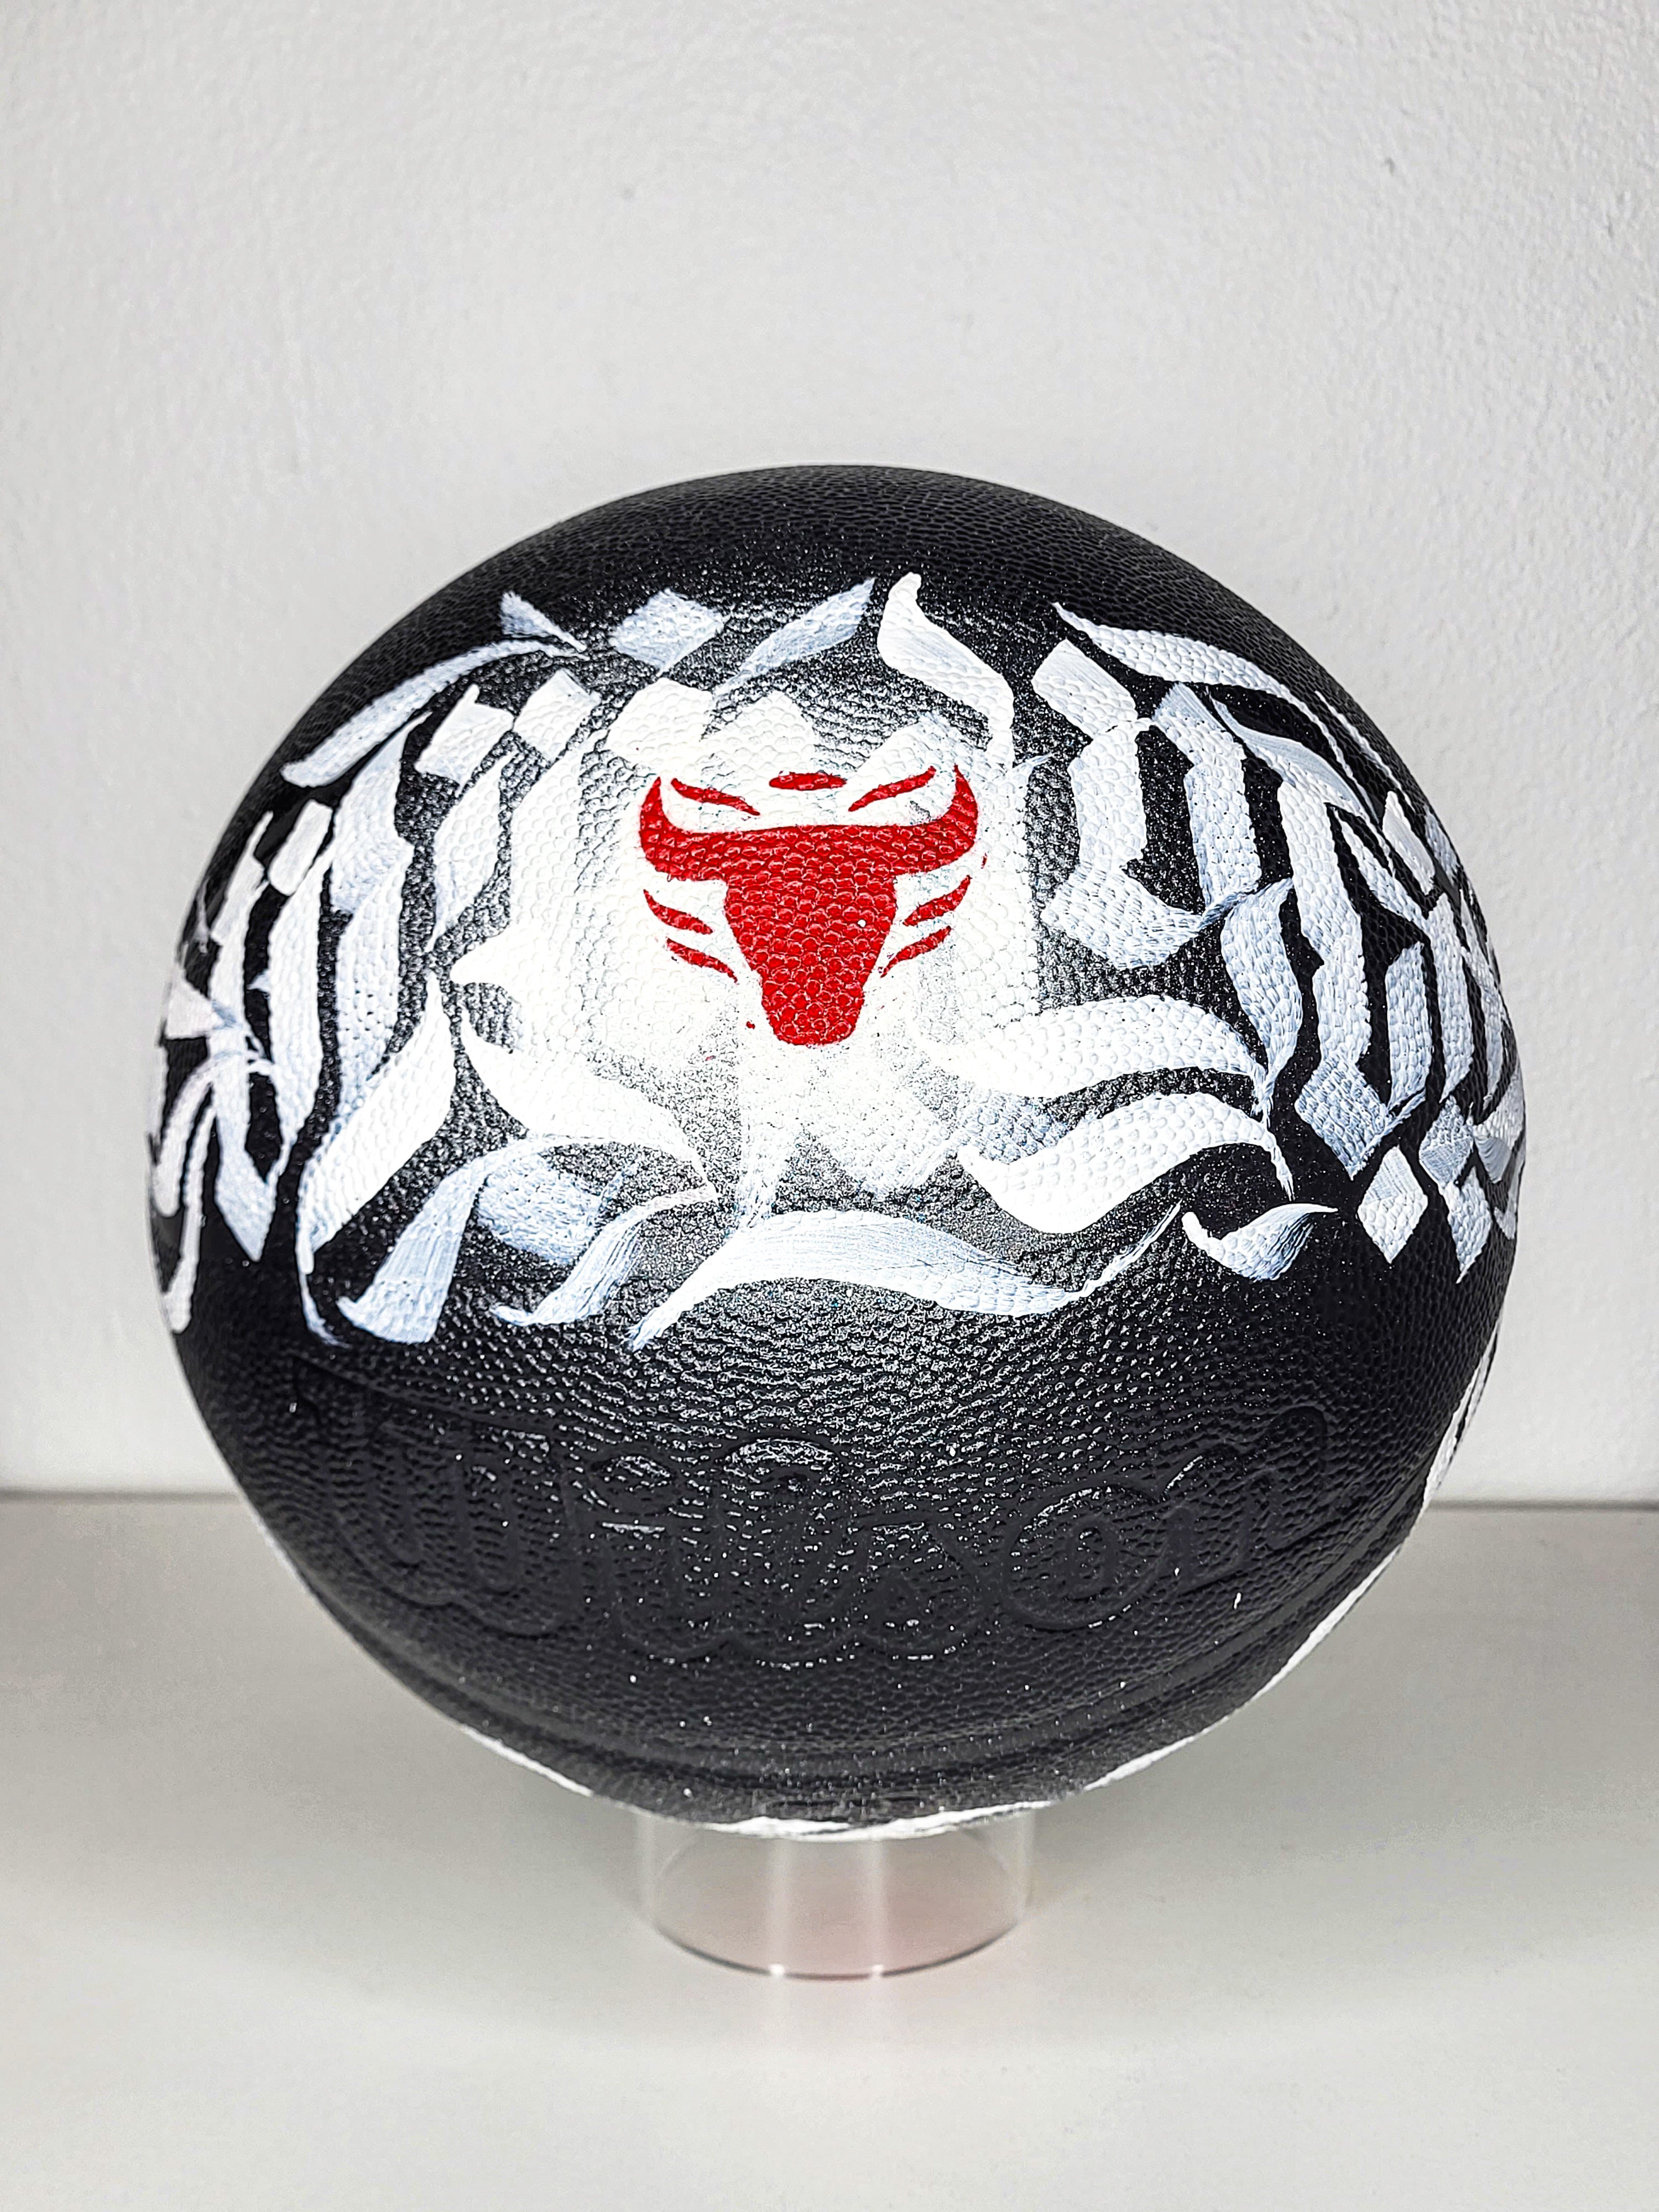 "Bulls World" Basketball by Tubs